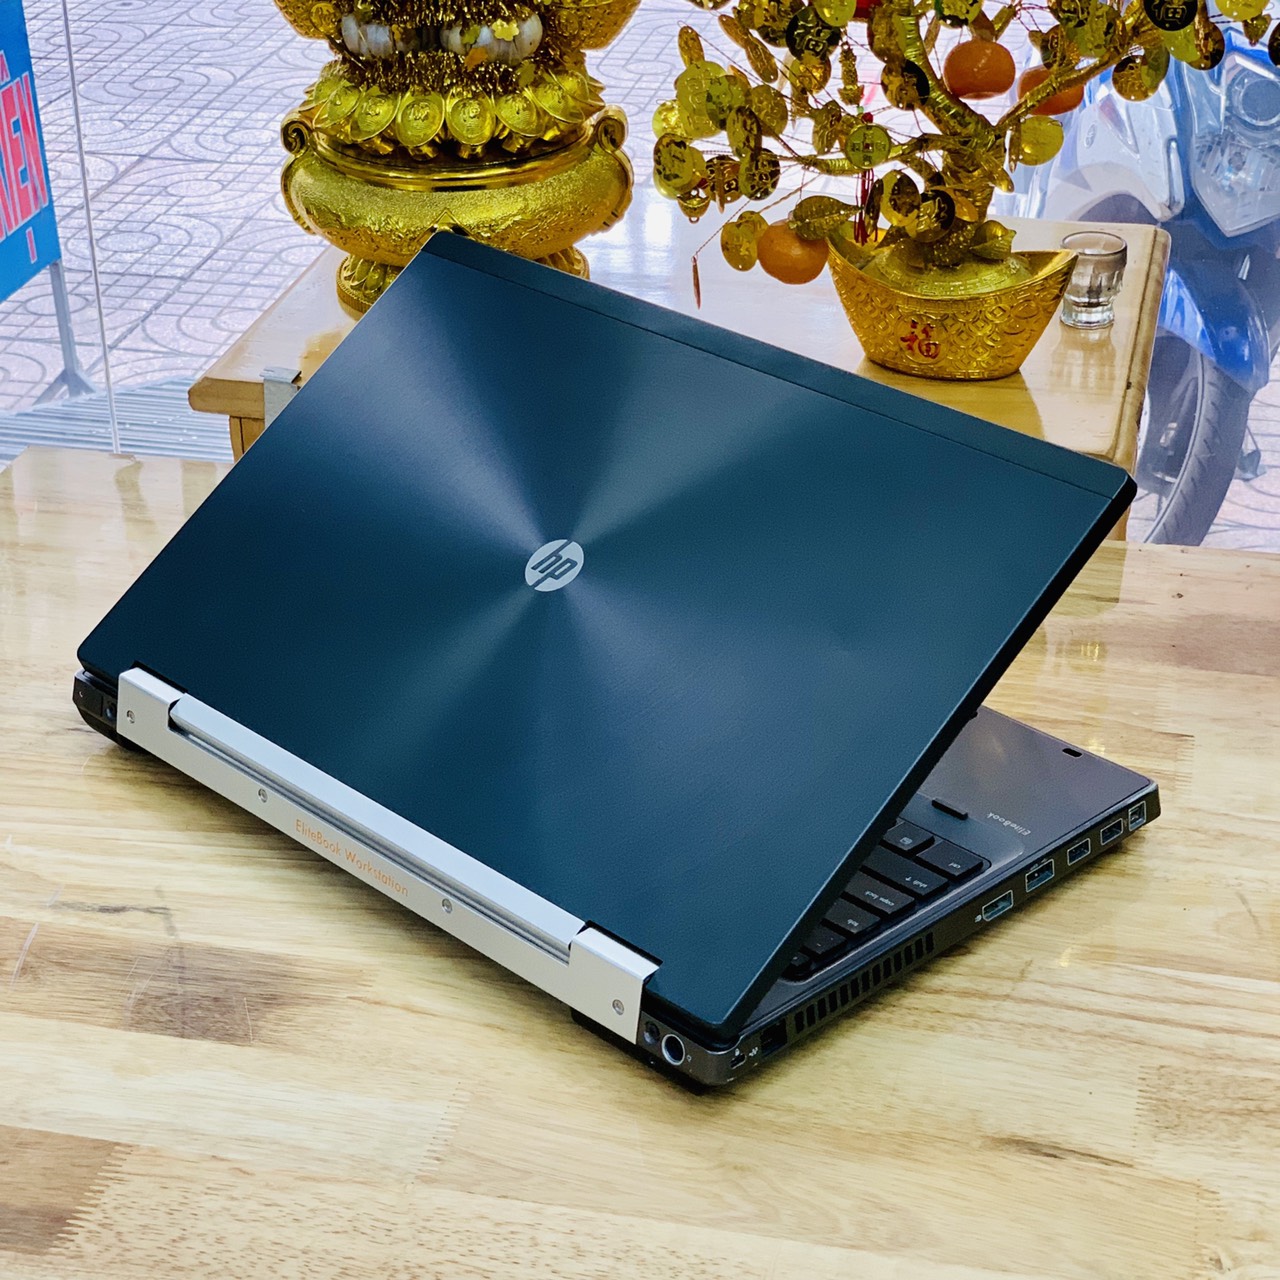 HP EliteBook 8570w – 3236QM